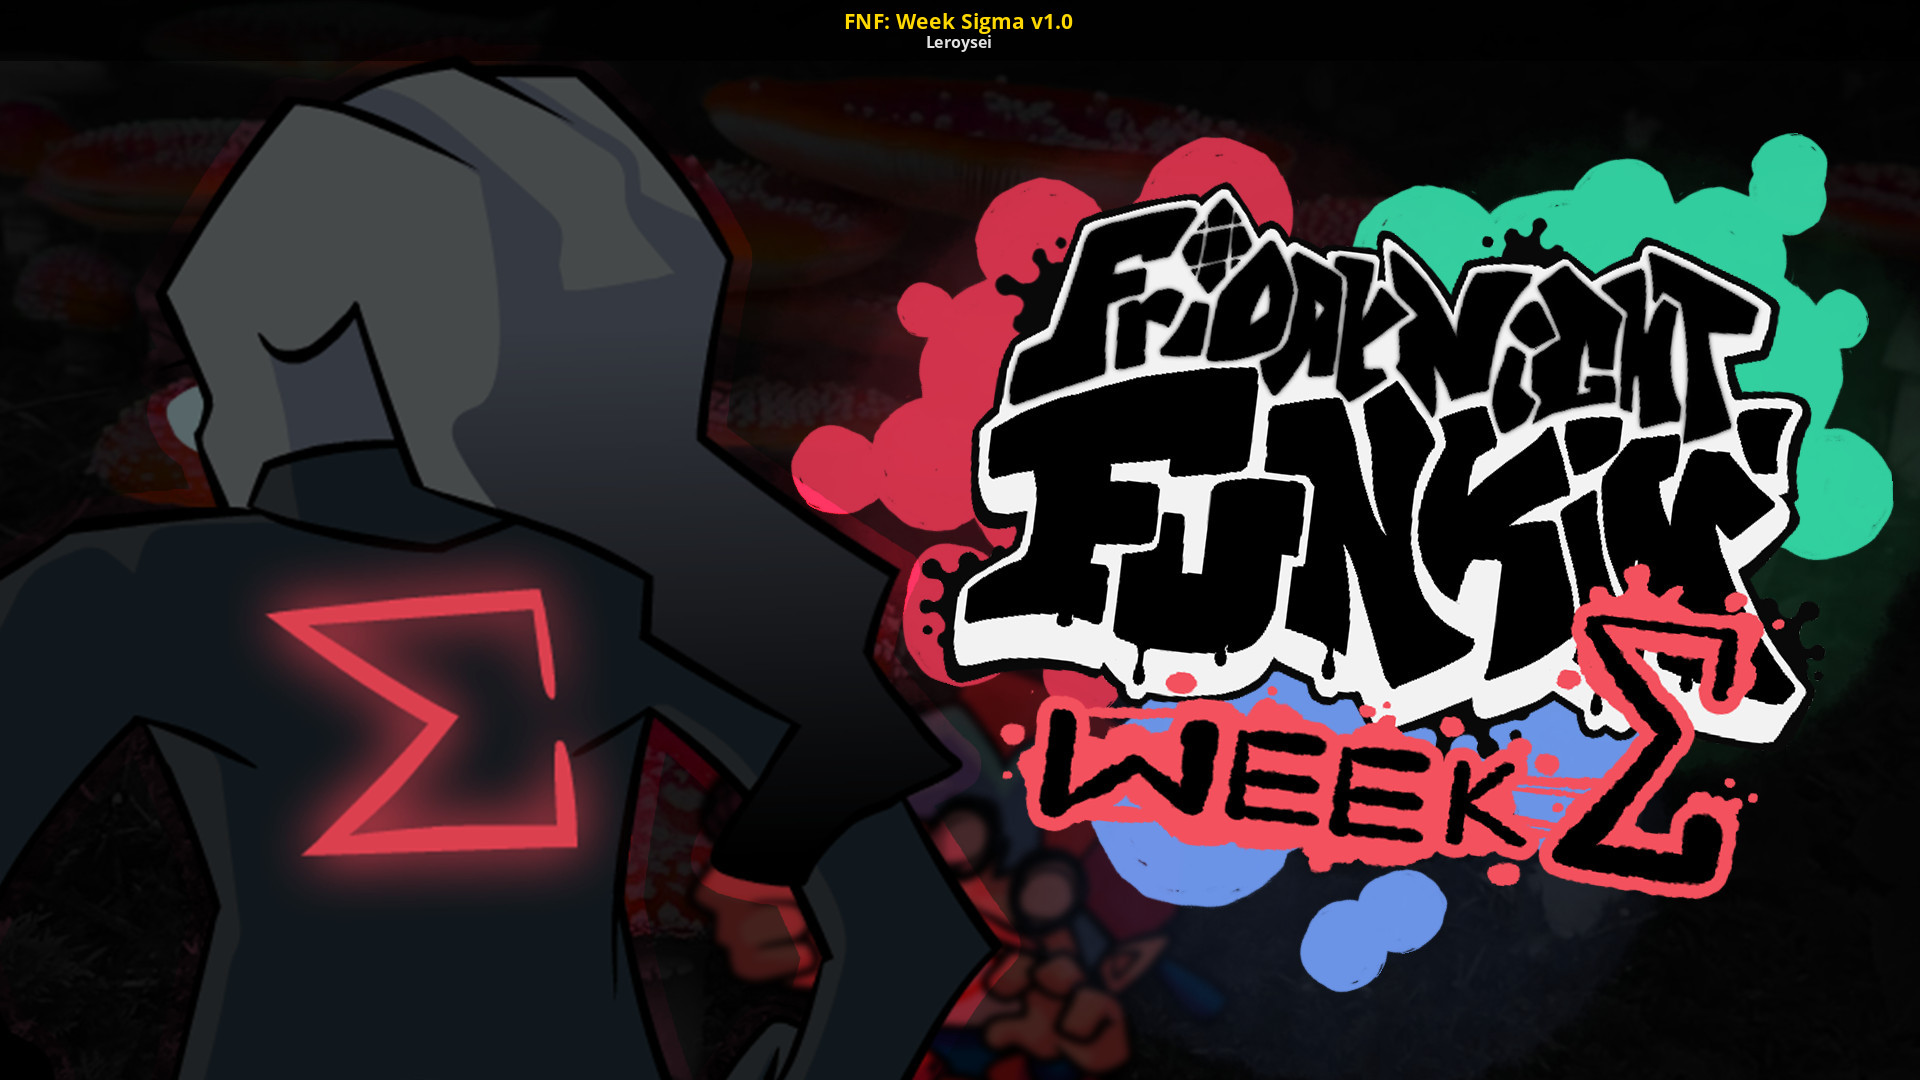 Fnf gameplay. Friday Night Funkin фулл. Игра Friday Night Funkin. ФНФ Фрайдей Найт Фанкин. FNF логотип игры.